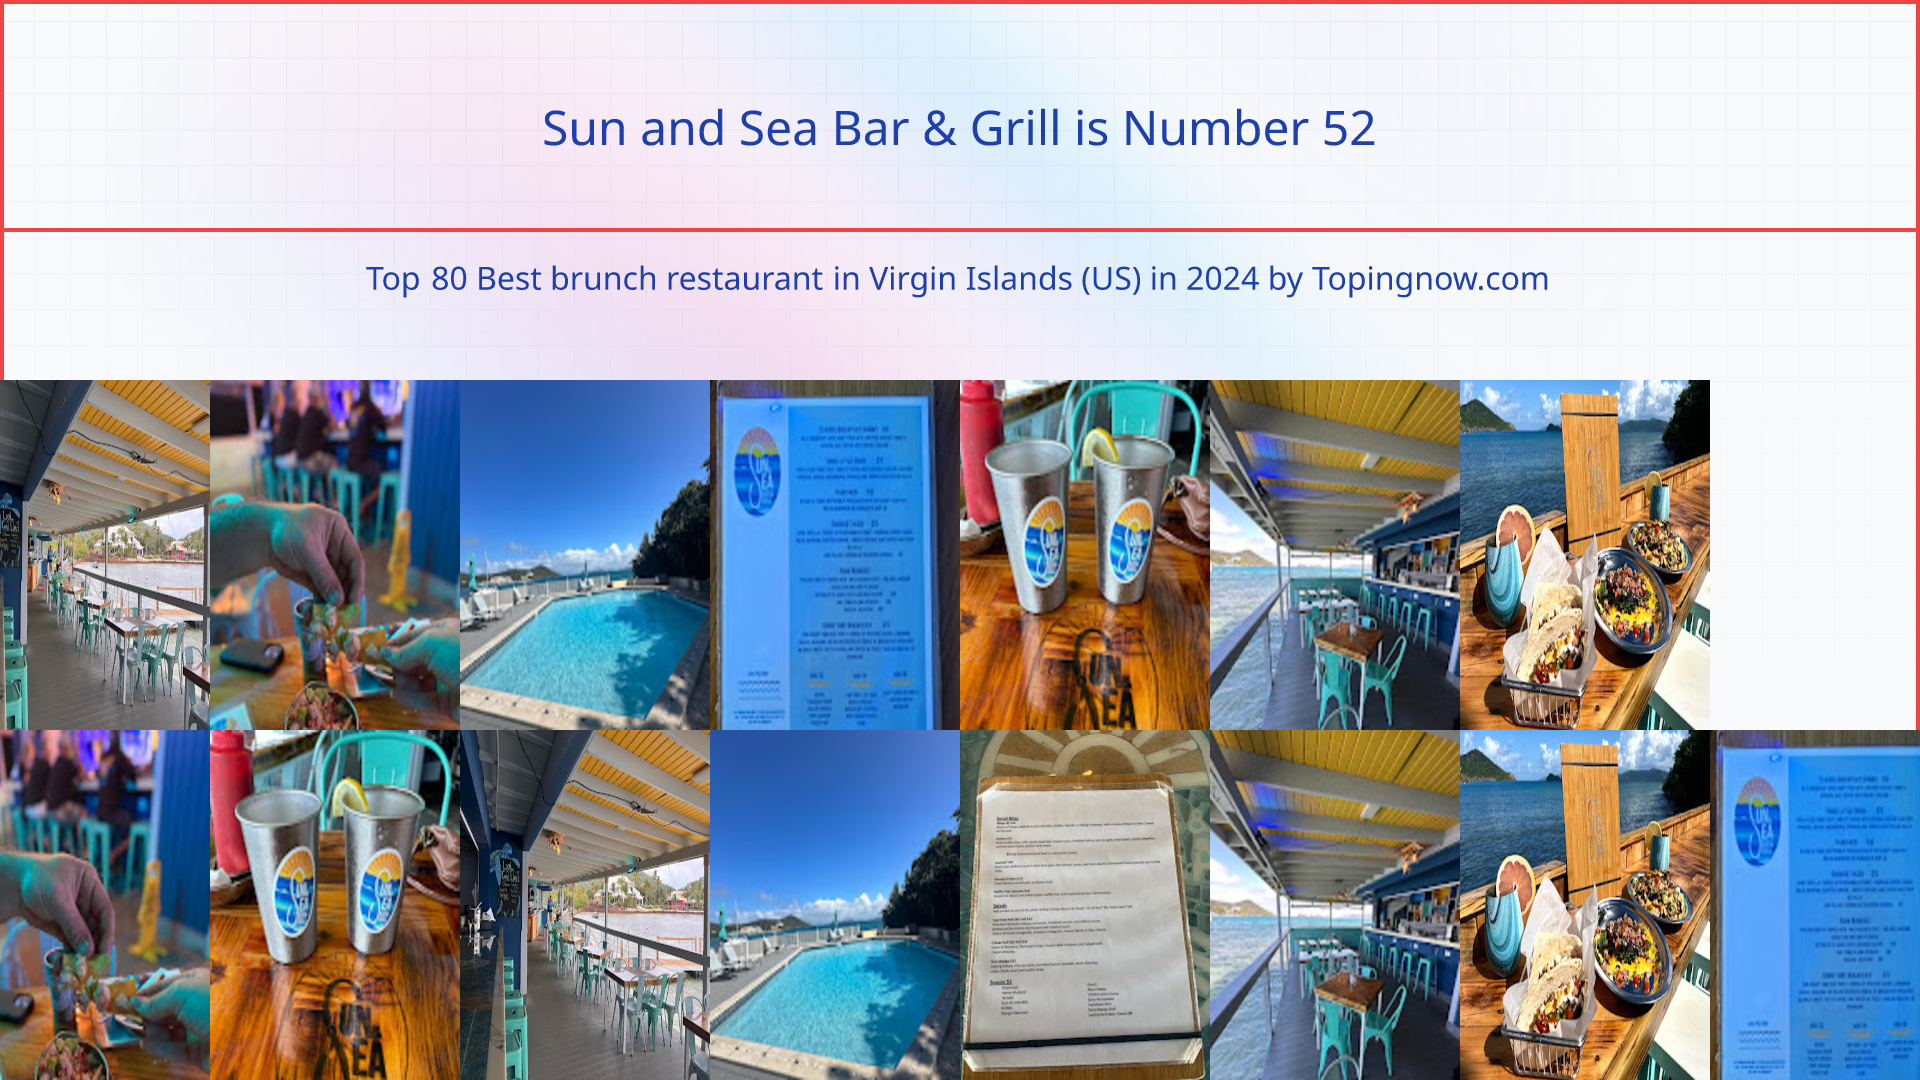 Sun and Sea Bar & Grill: Top 80 Best brunch restaurant in Virgin Islands (US) in 2024